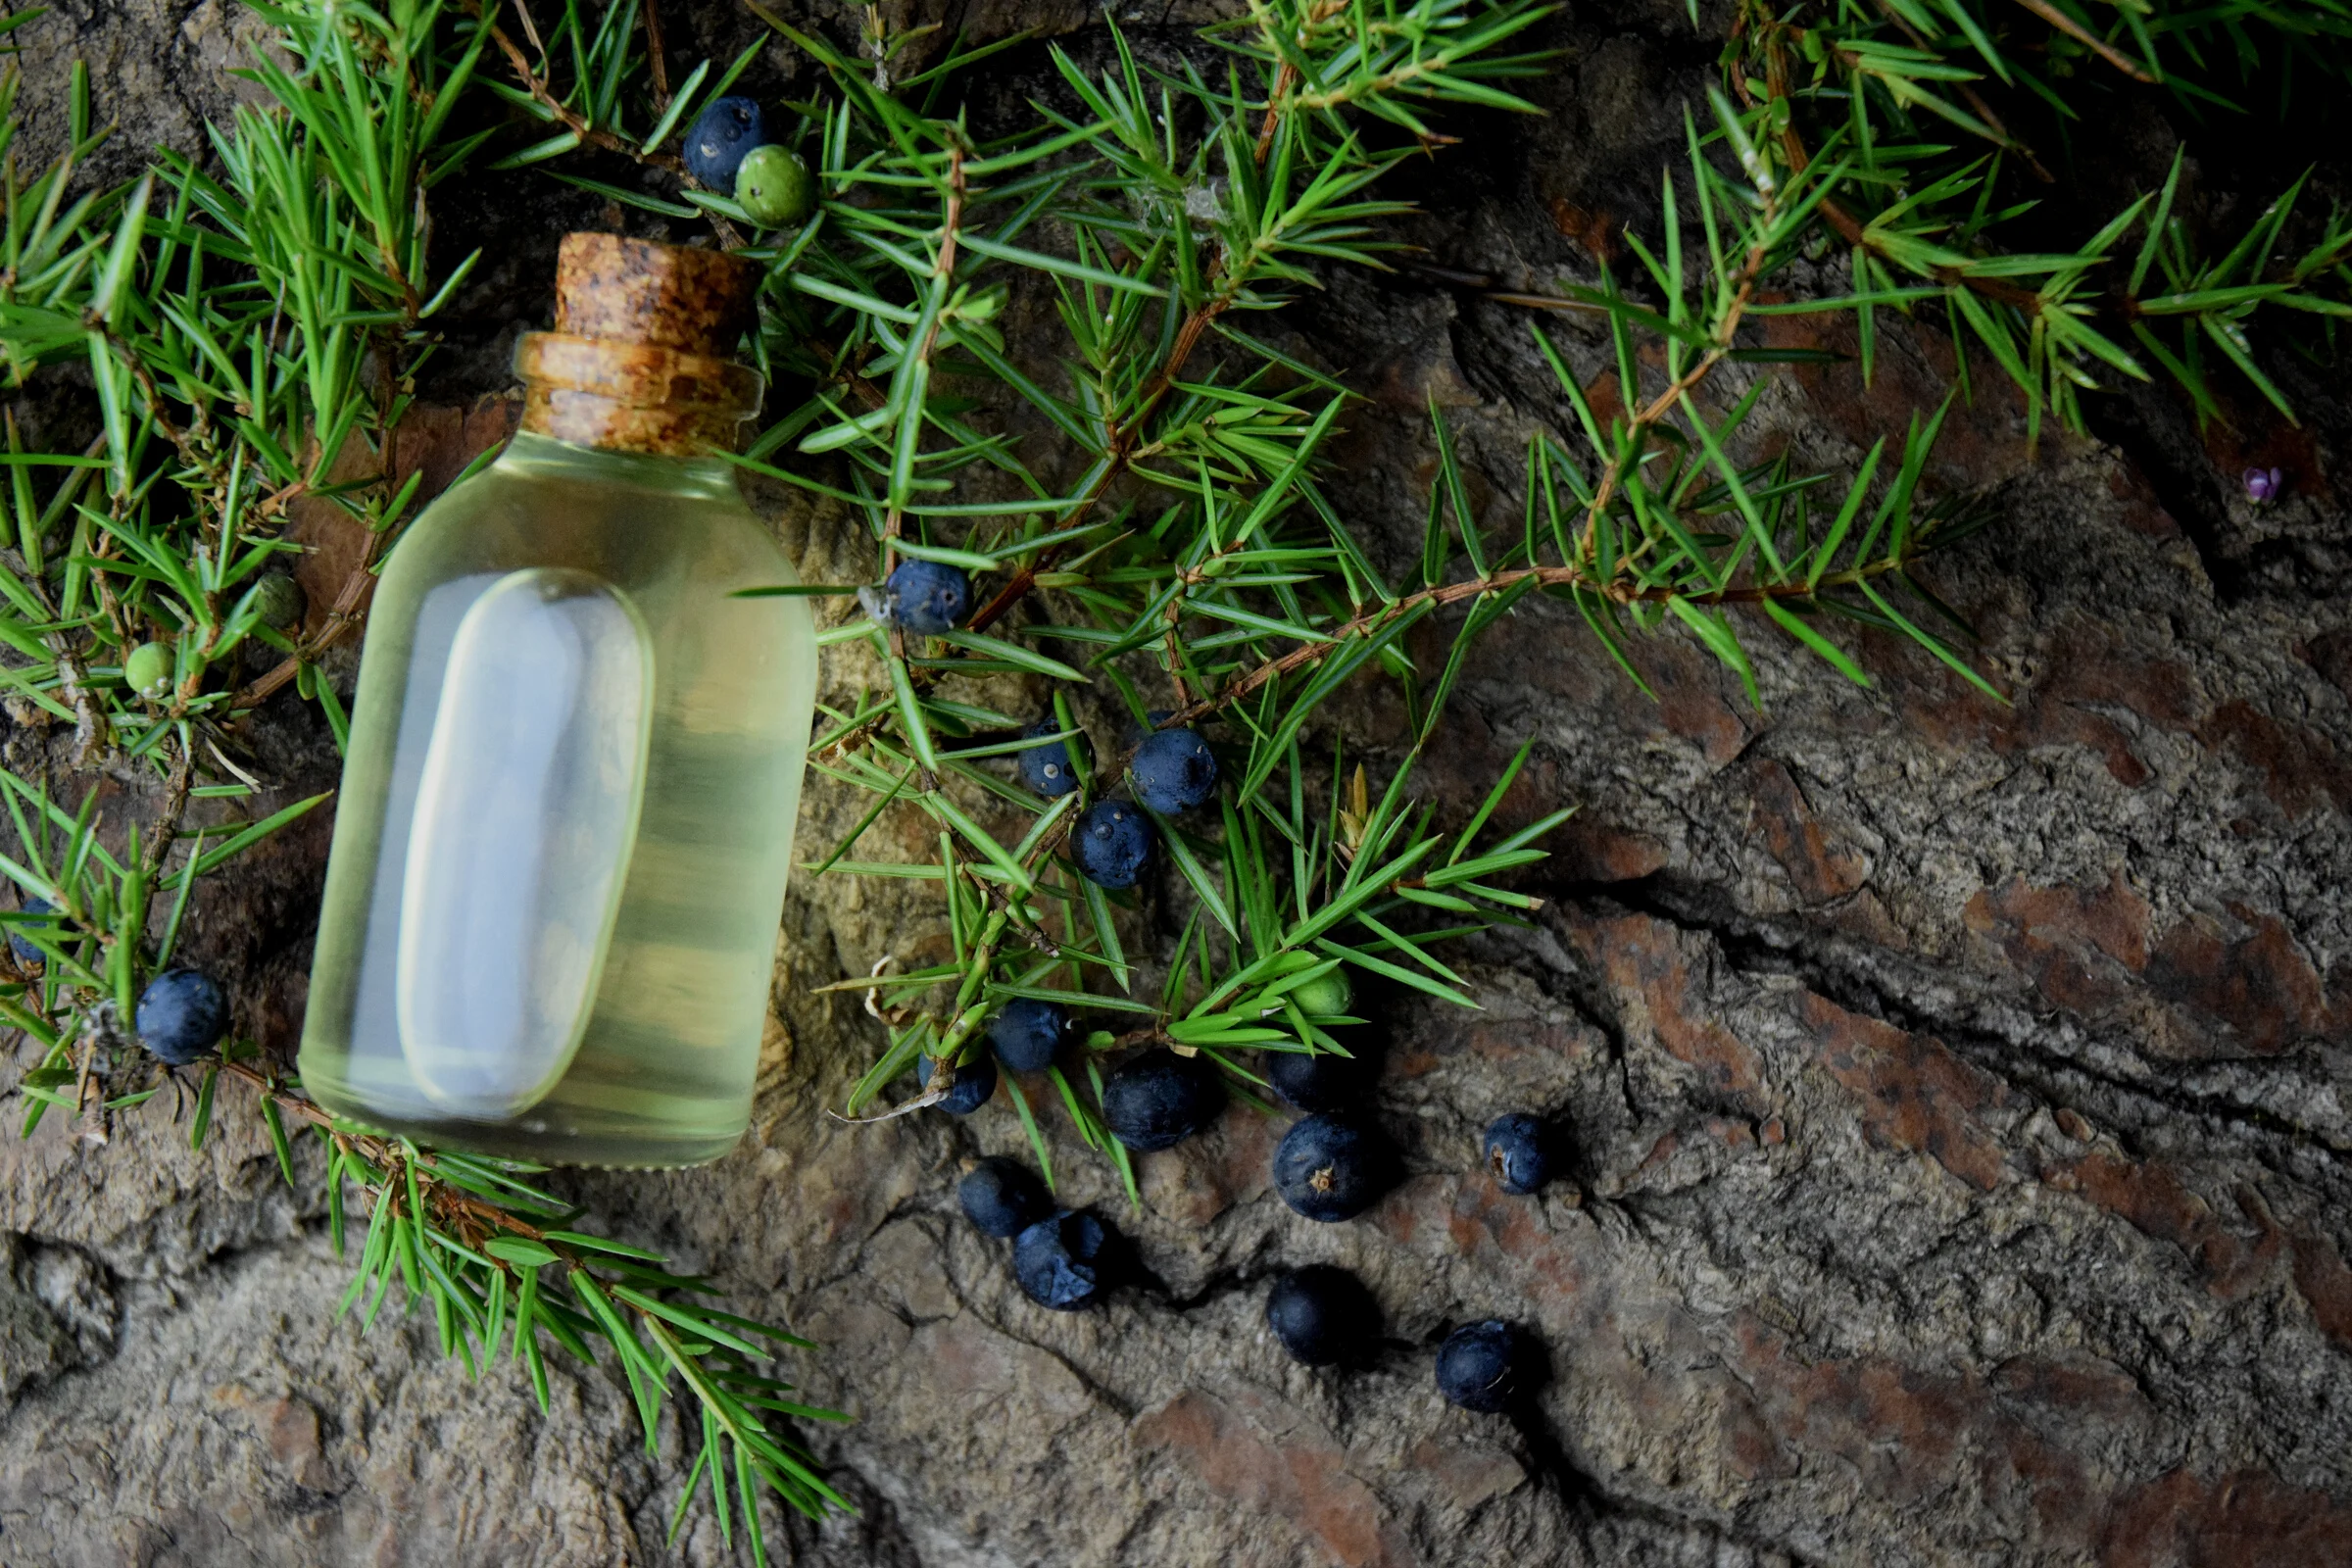 juniper oil aromatherapy